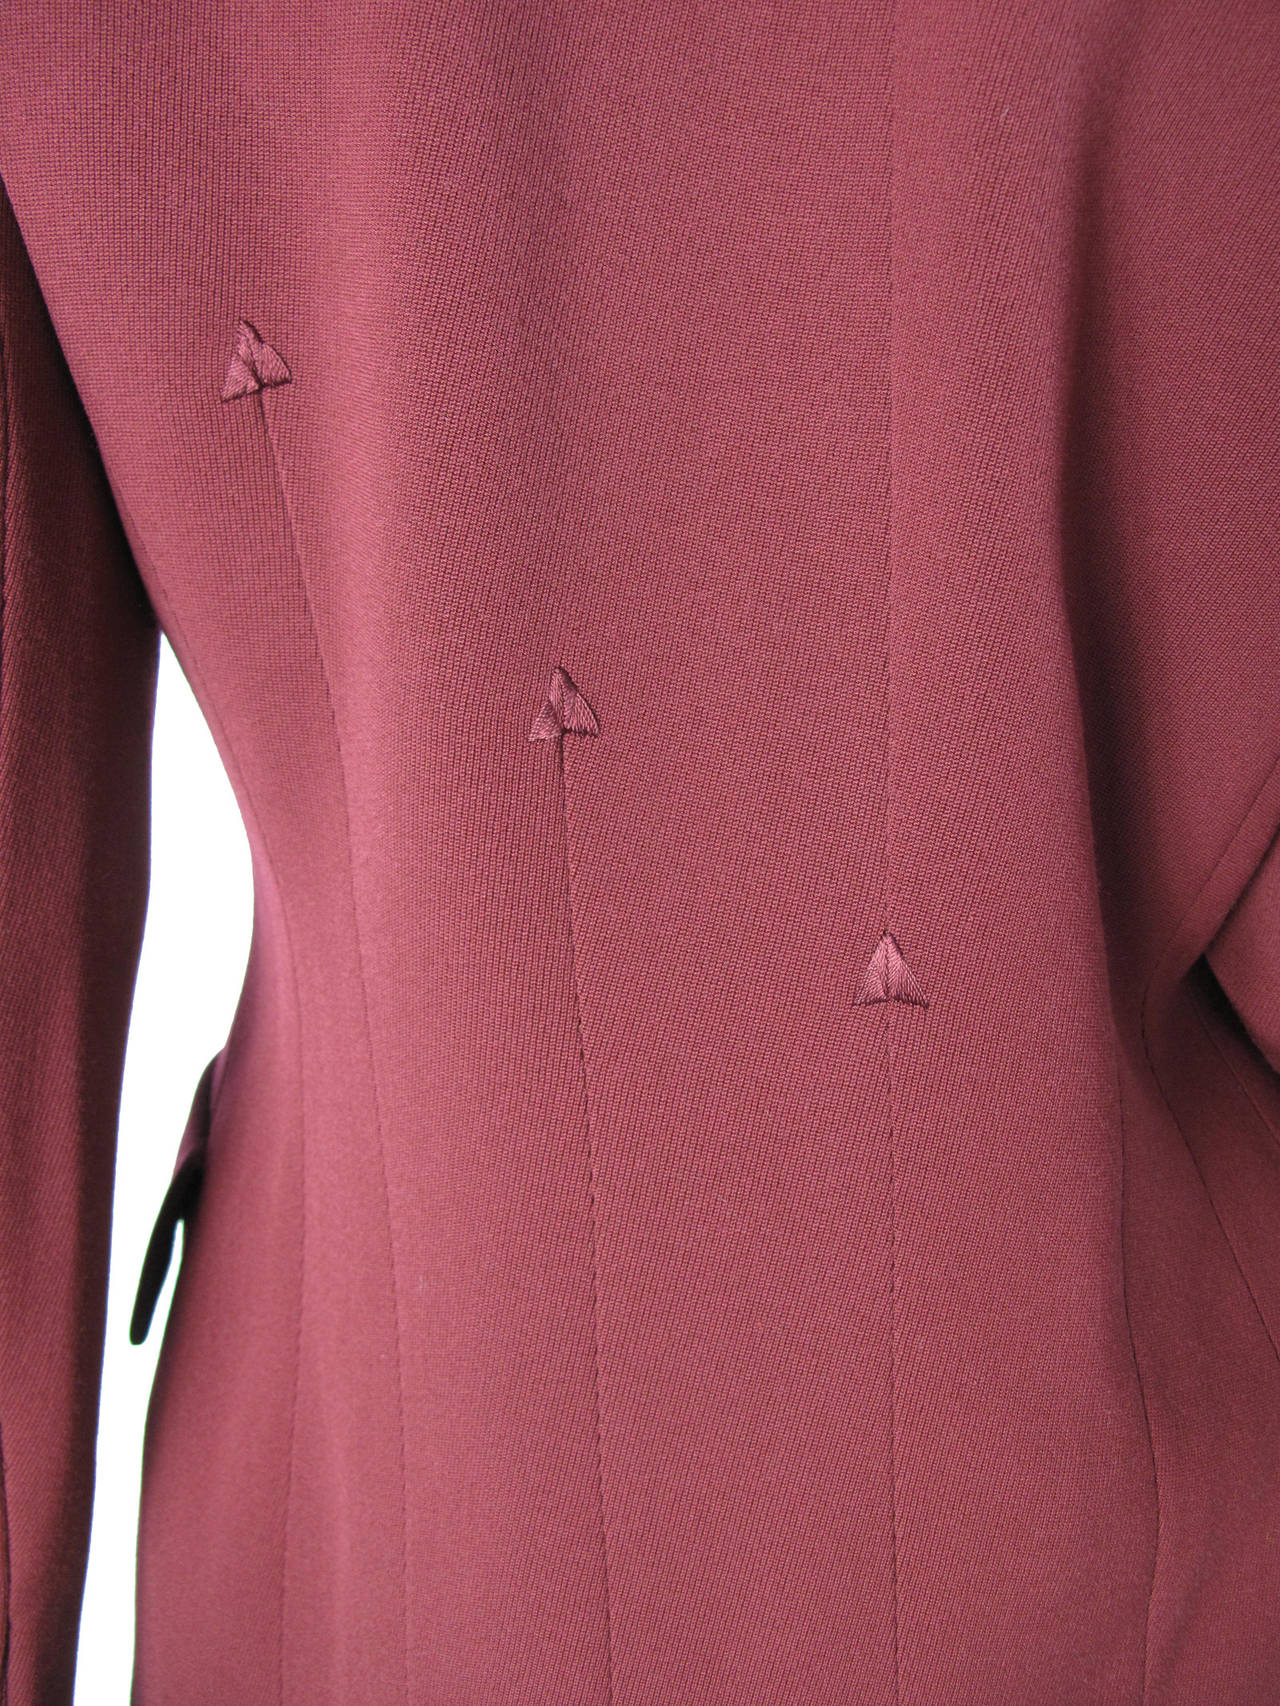 Karl Lagerfeld maroon wool gabardine suit with arrow stitching 2